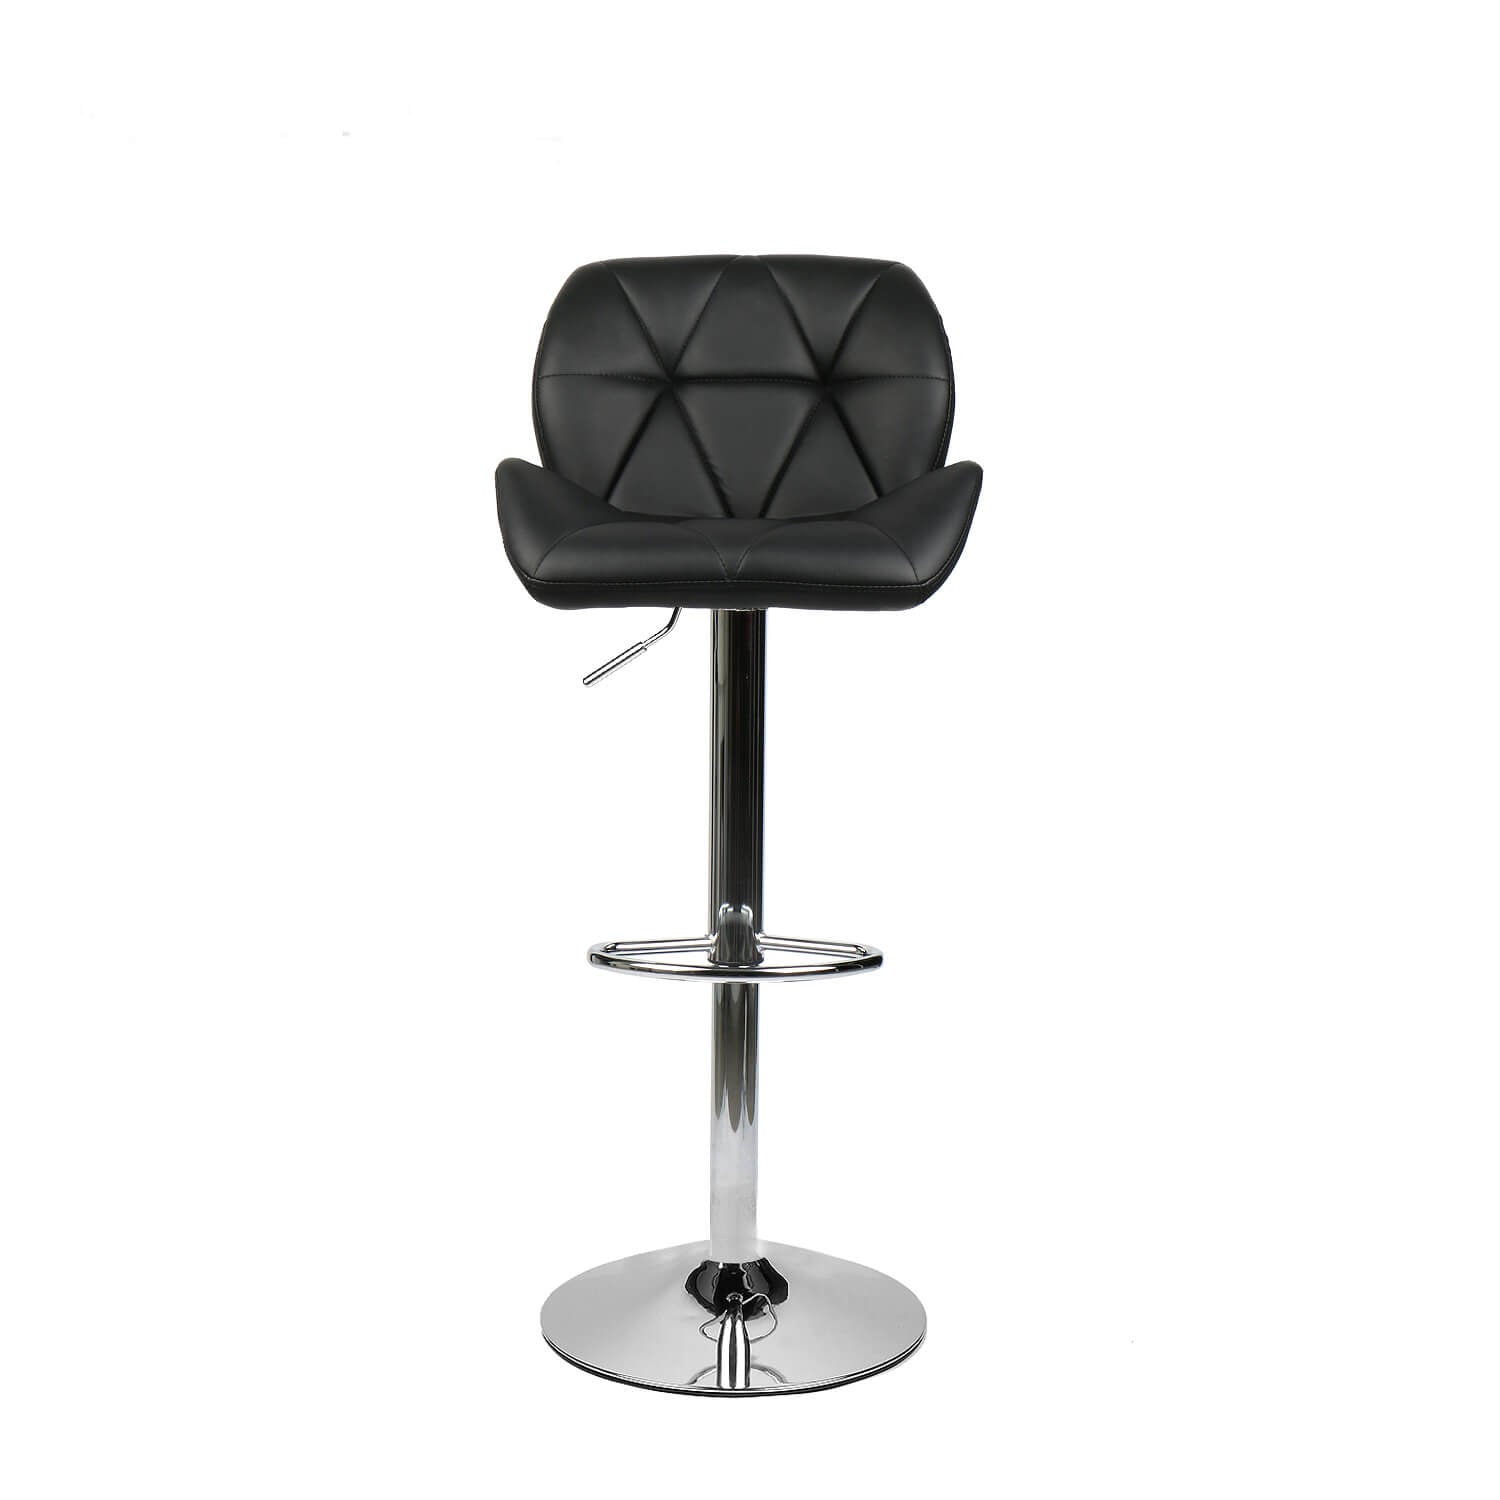 Elecwish black bar stool